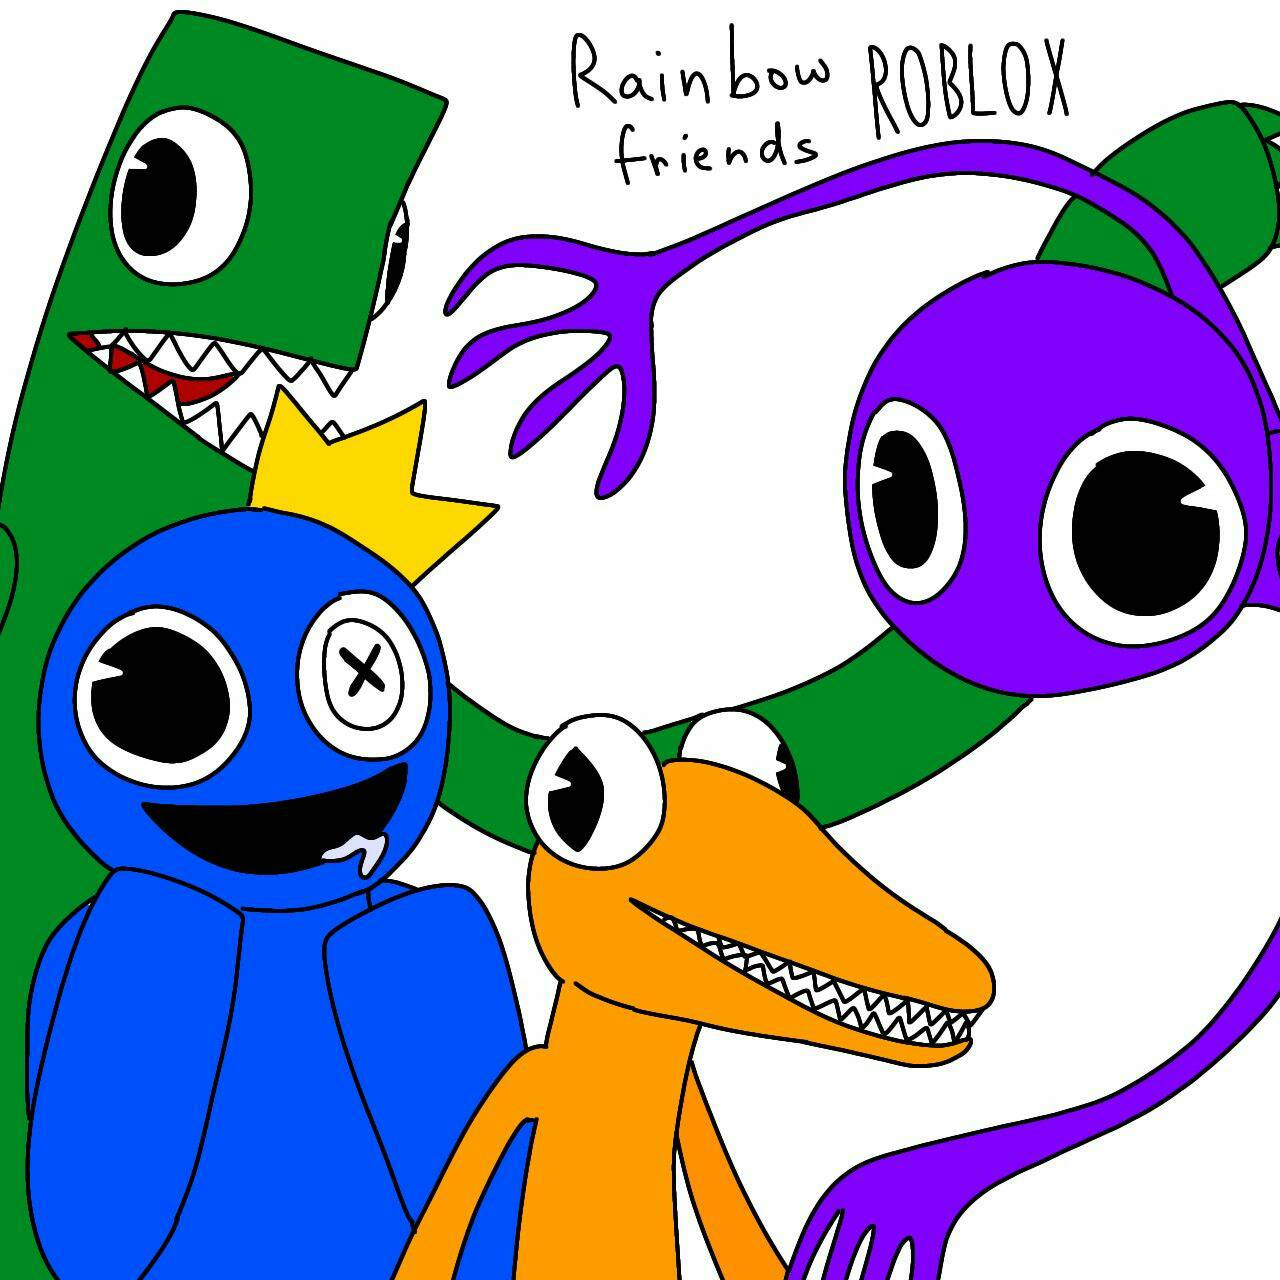 Roblox rainbow friends green. by umimallang on DeviantArt